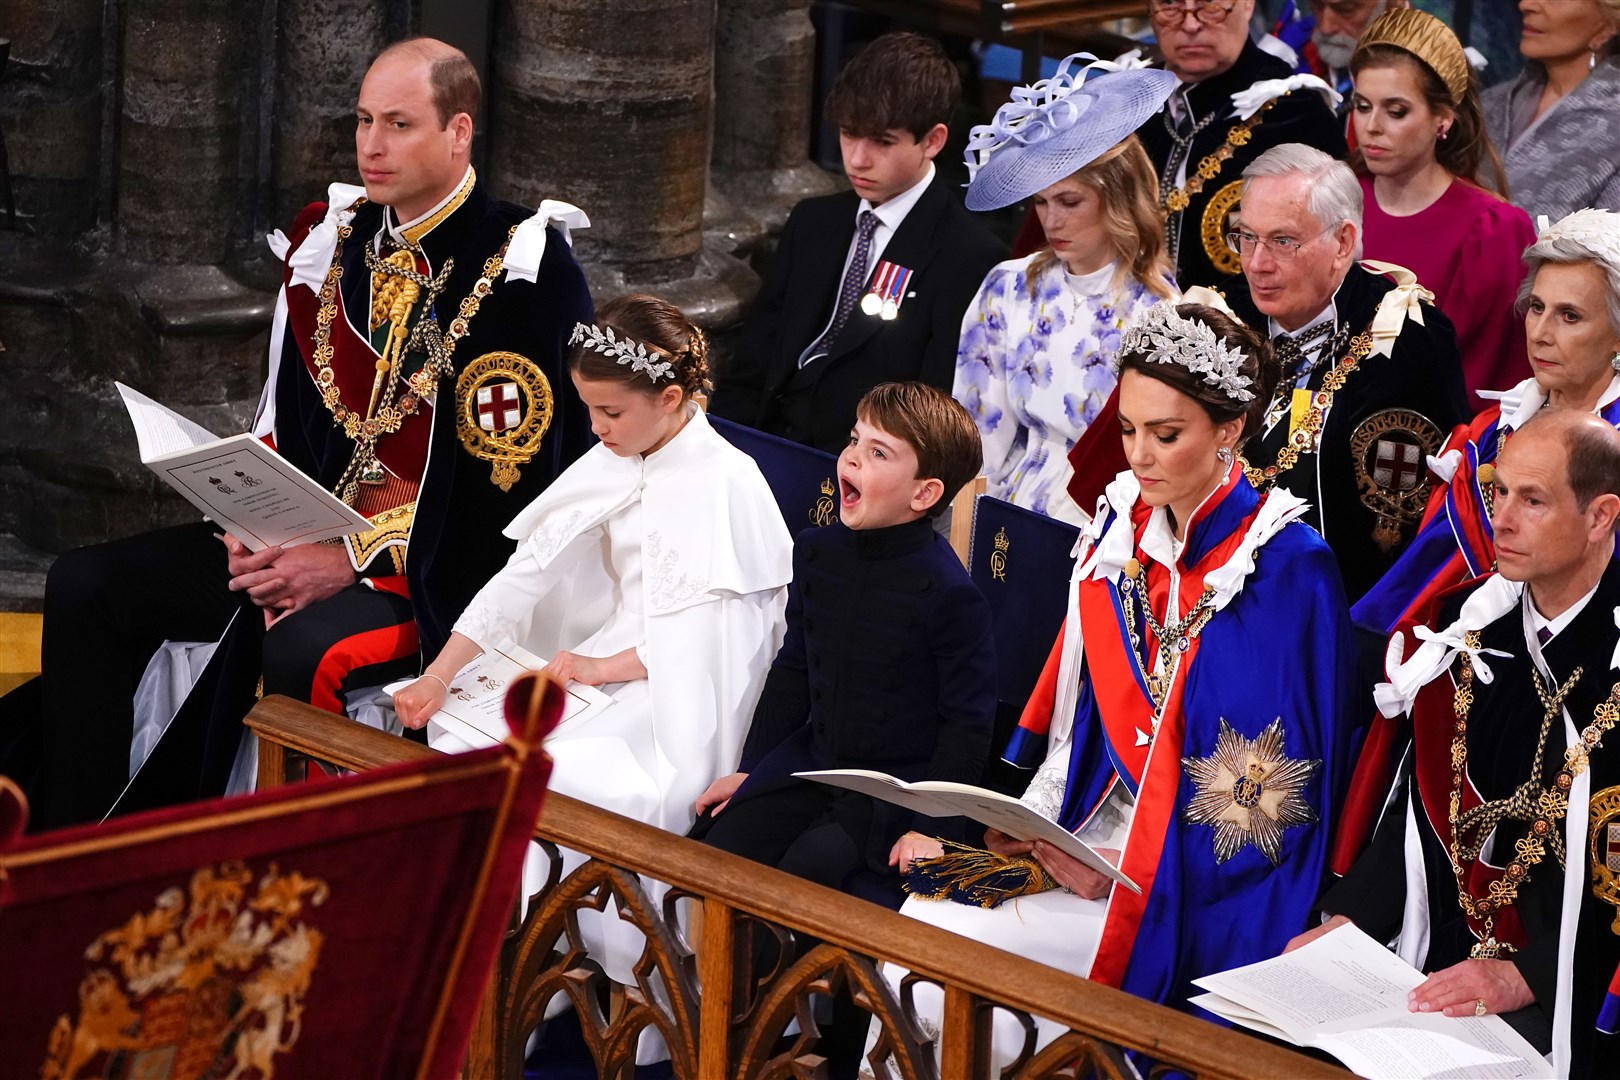 The Prince of Wales, Princess Charlotte, Prince Louis, the Princess of Wales and the Duke of Edinburgh at the coronation (Yui Mok/PA)